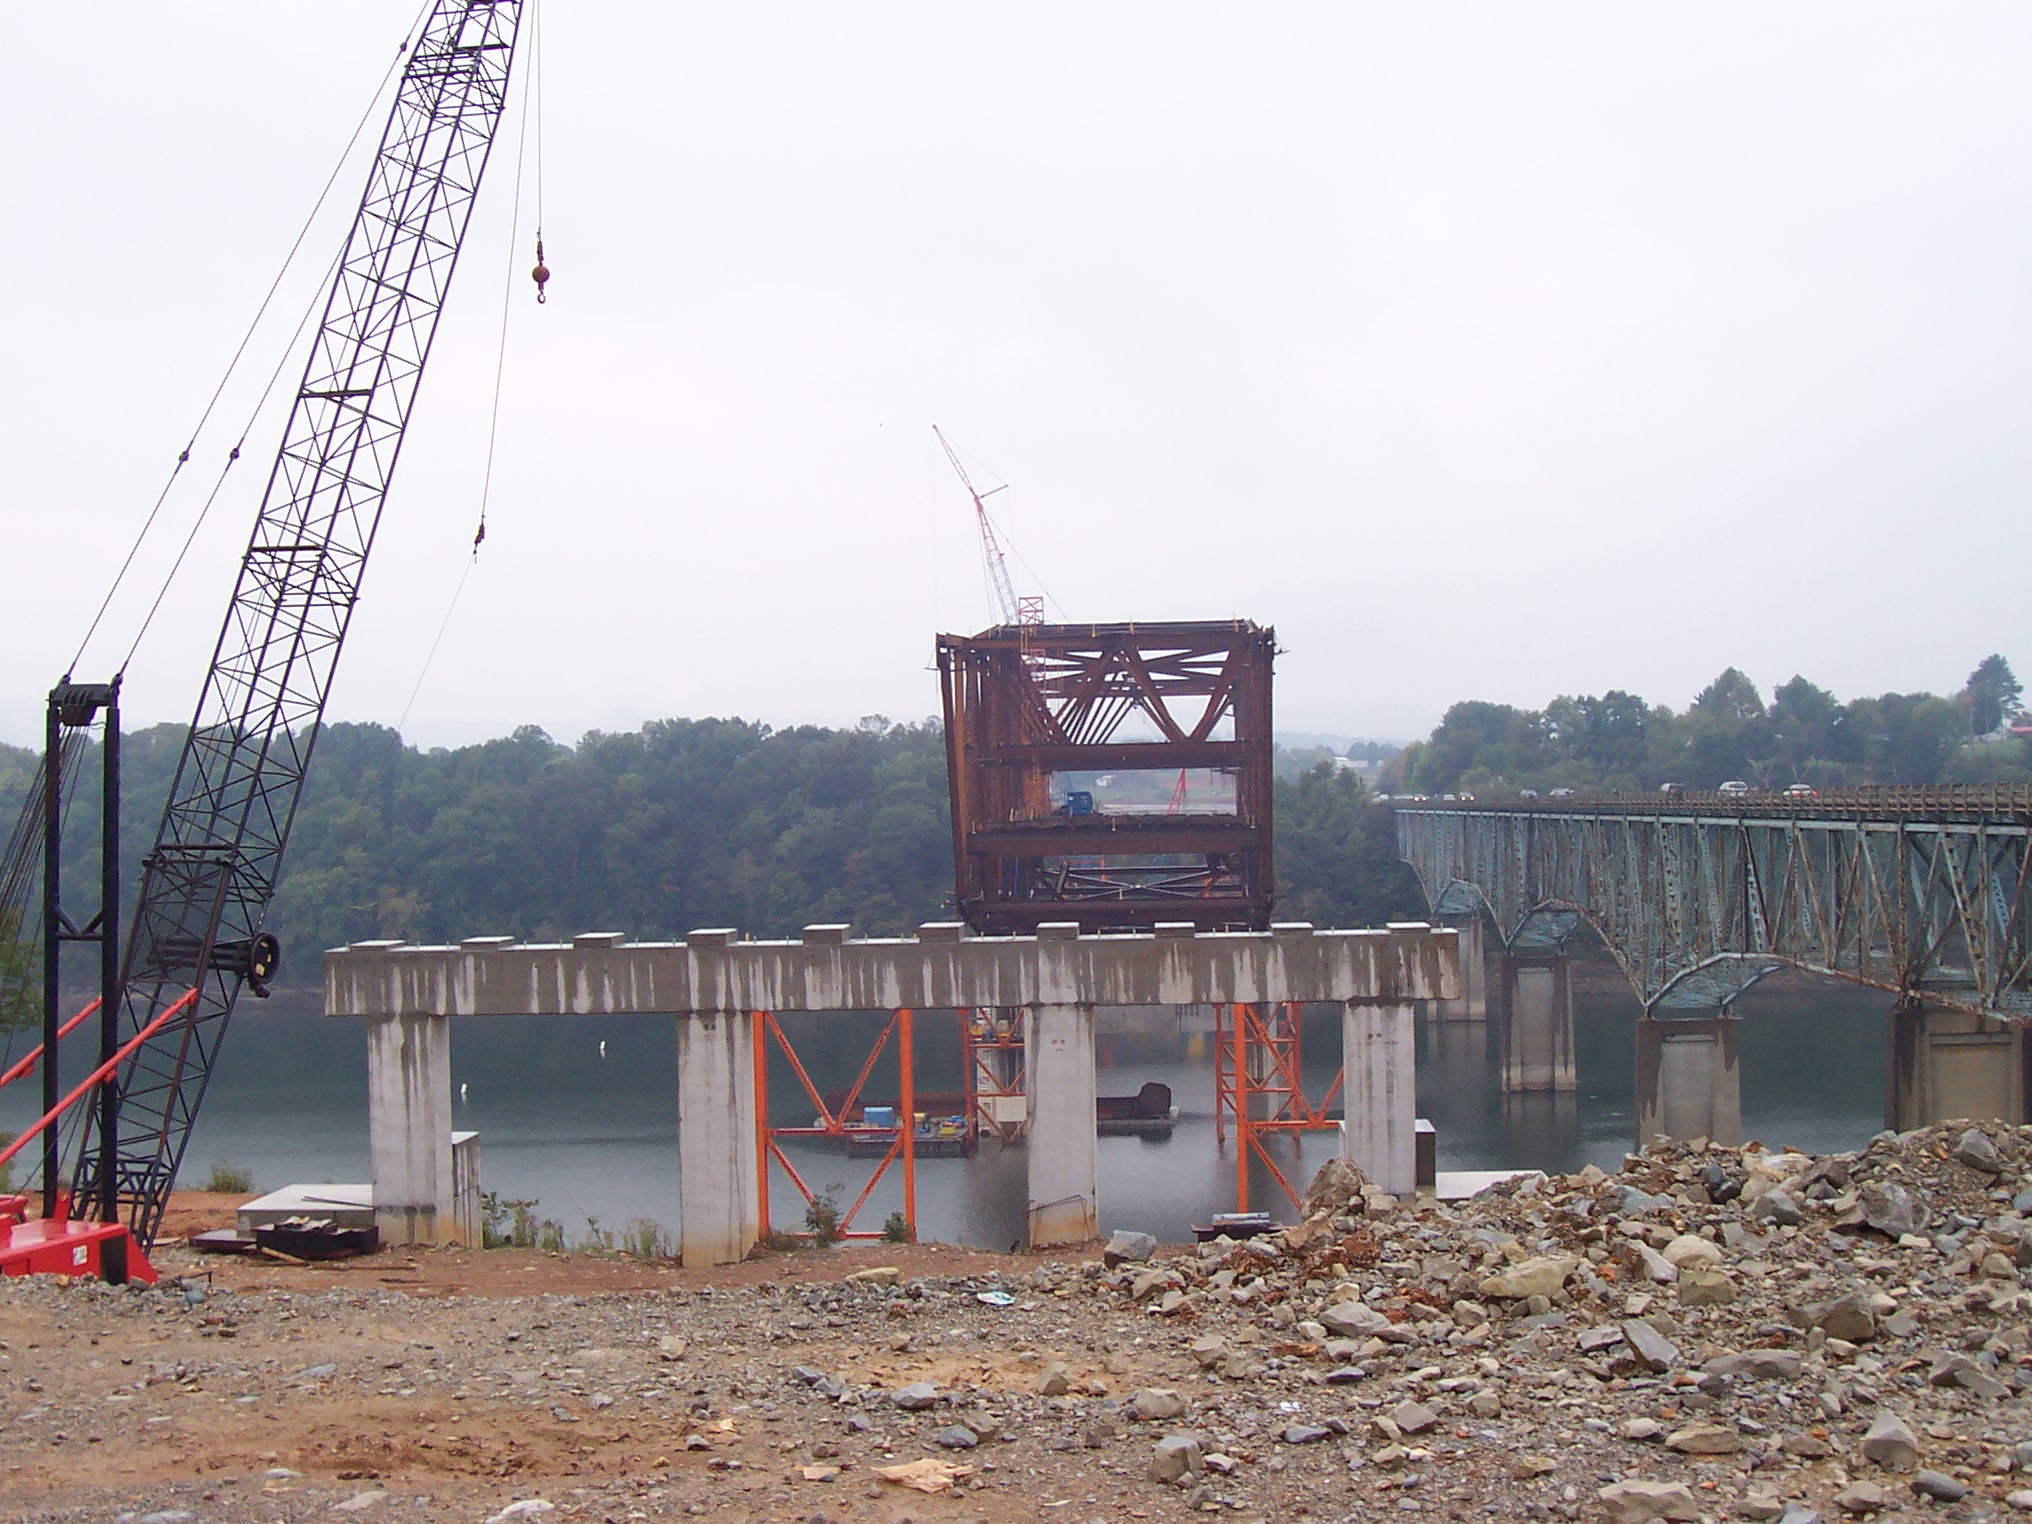 New KY 90 Lake Cumberland Bridge under construction next to the existing KY 90 bridge (Oct. 2, 2004).